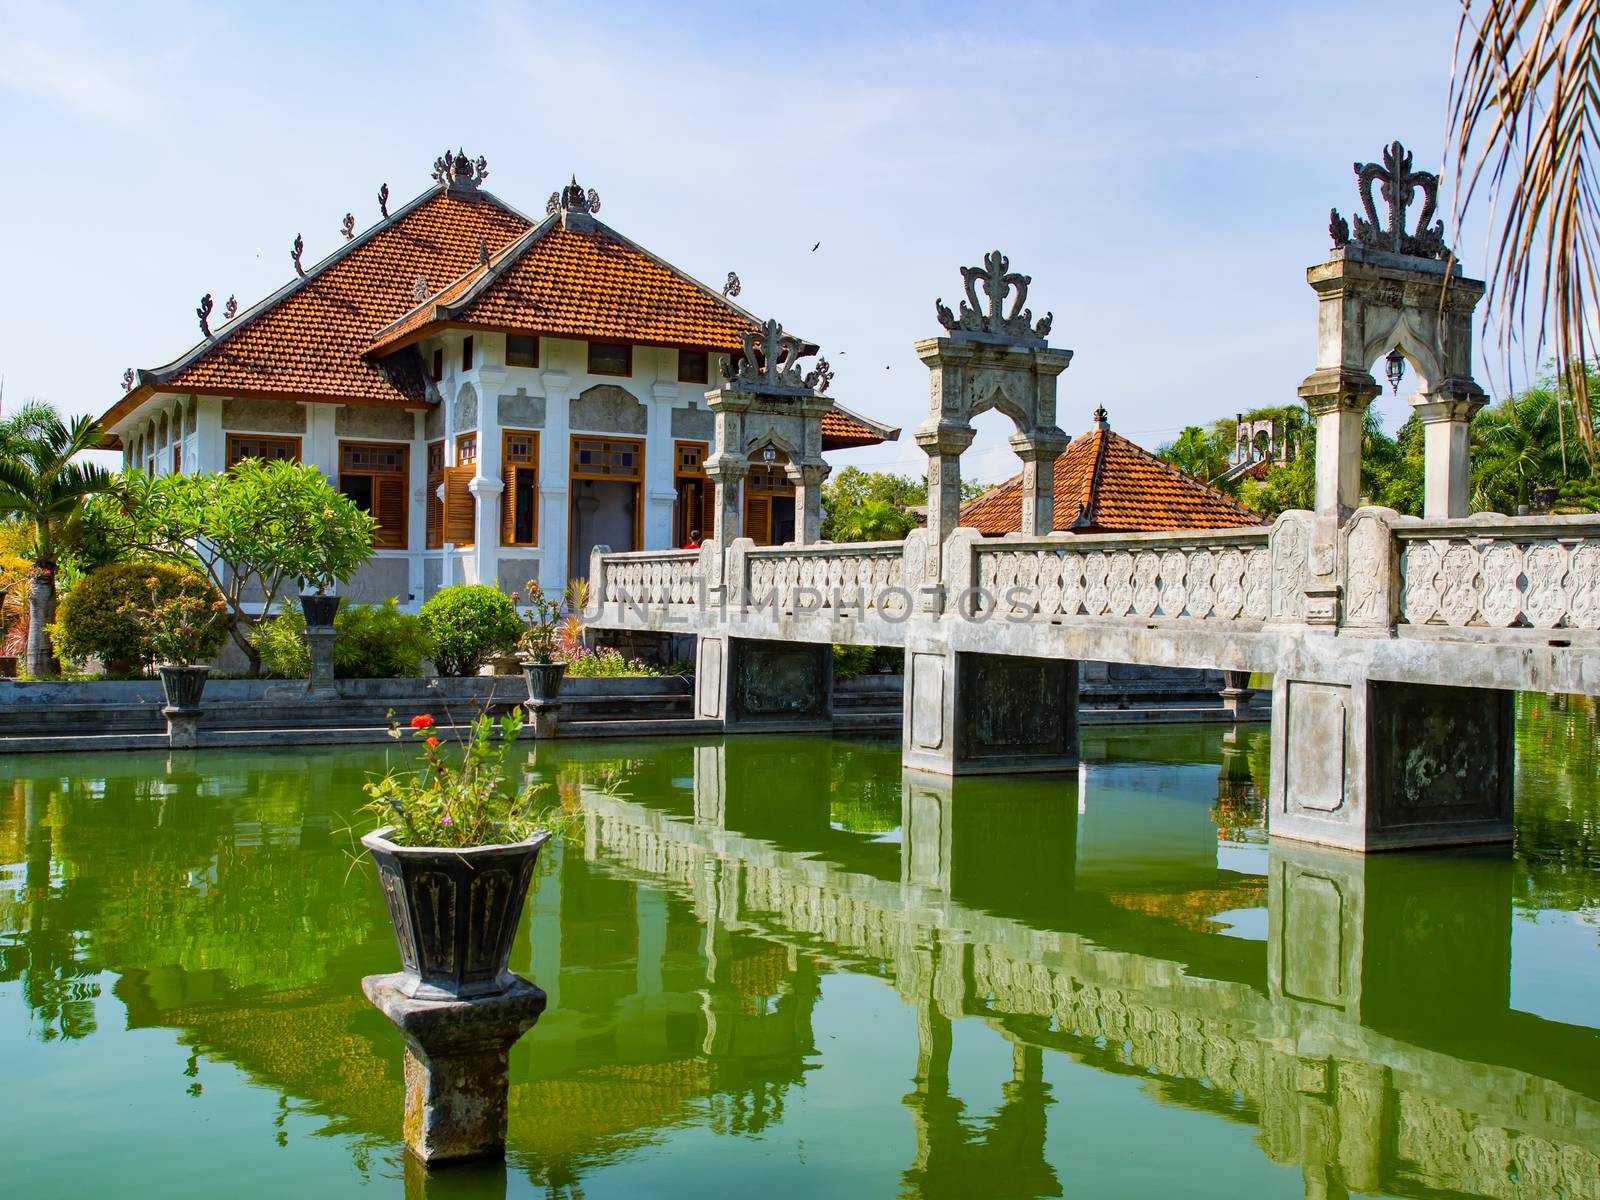 Karangasem water temple palace in Bali, Indonesia